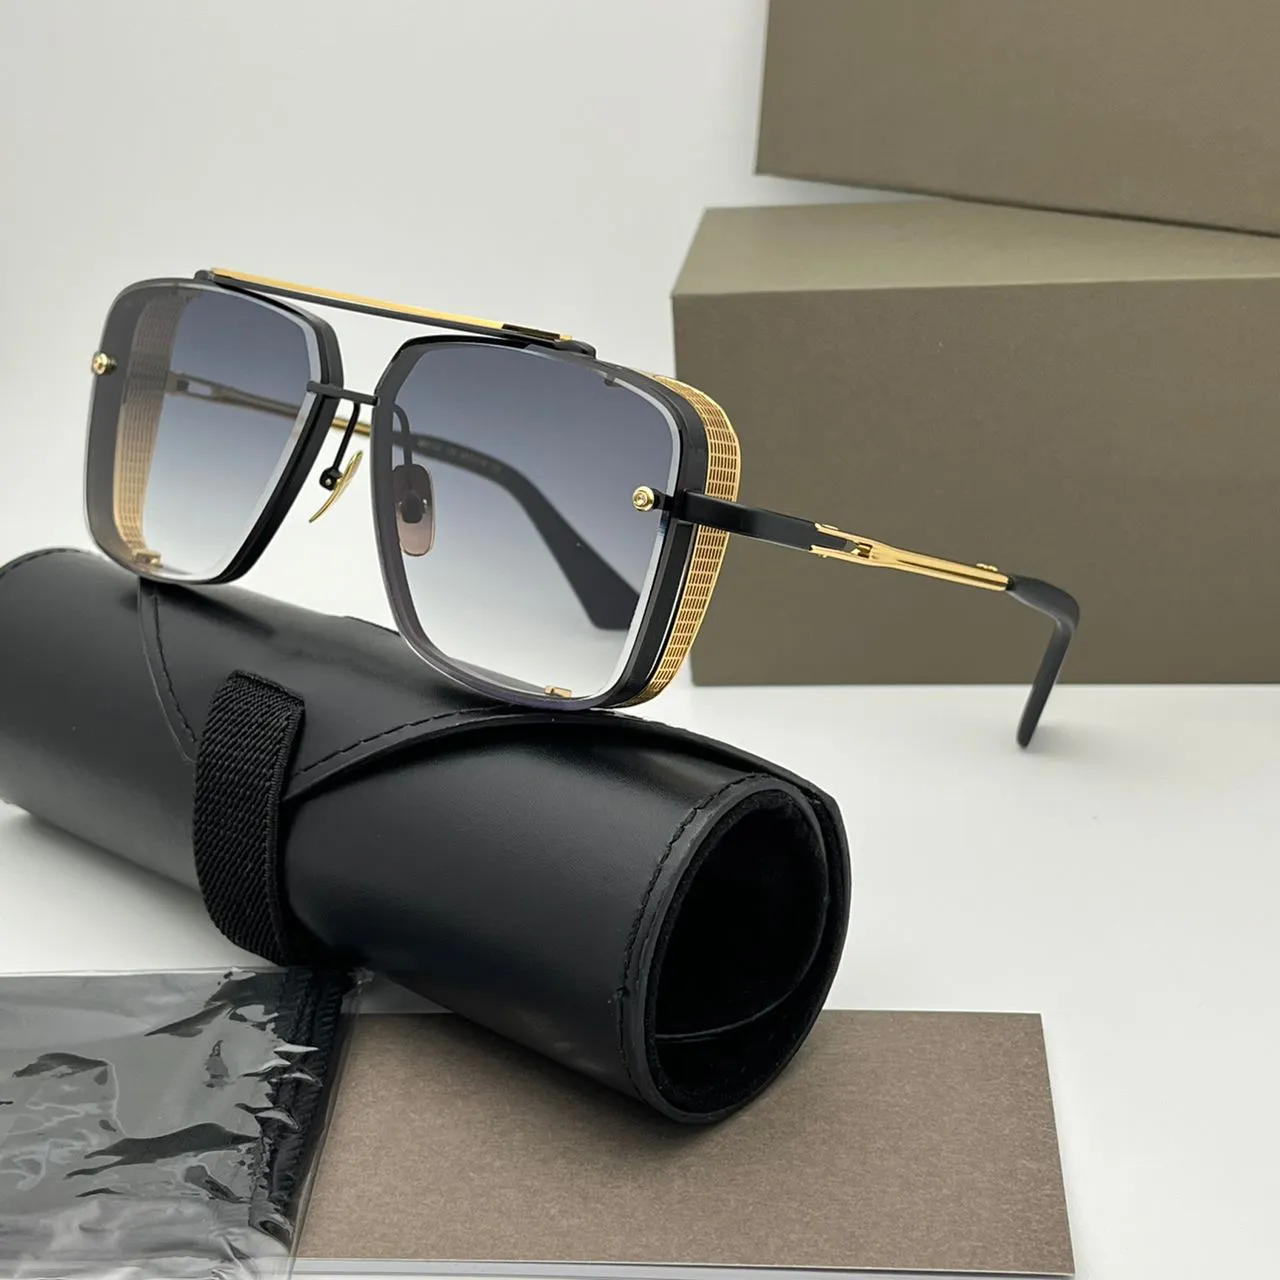 L EDITION M SIX Sunglasses For Men and Women Summer Classic Style Anti-Ultraviolet Retro Plate Square Full Frame Fashion Eyeglasses Random Box